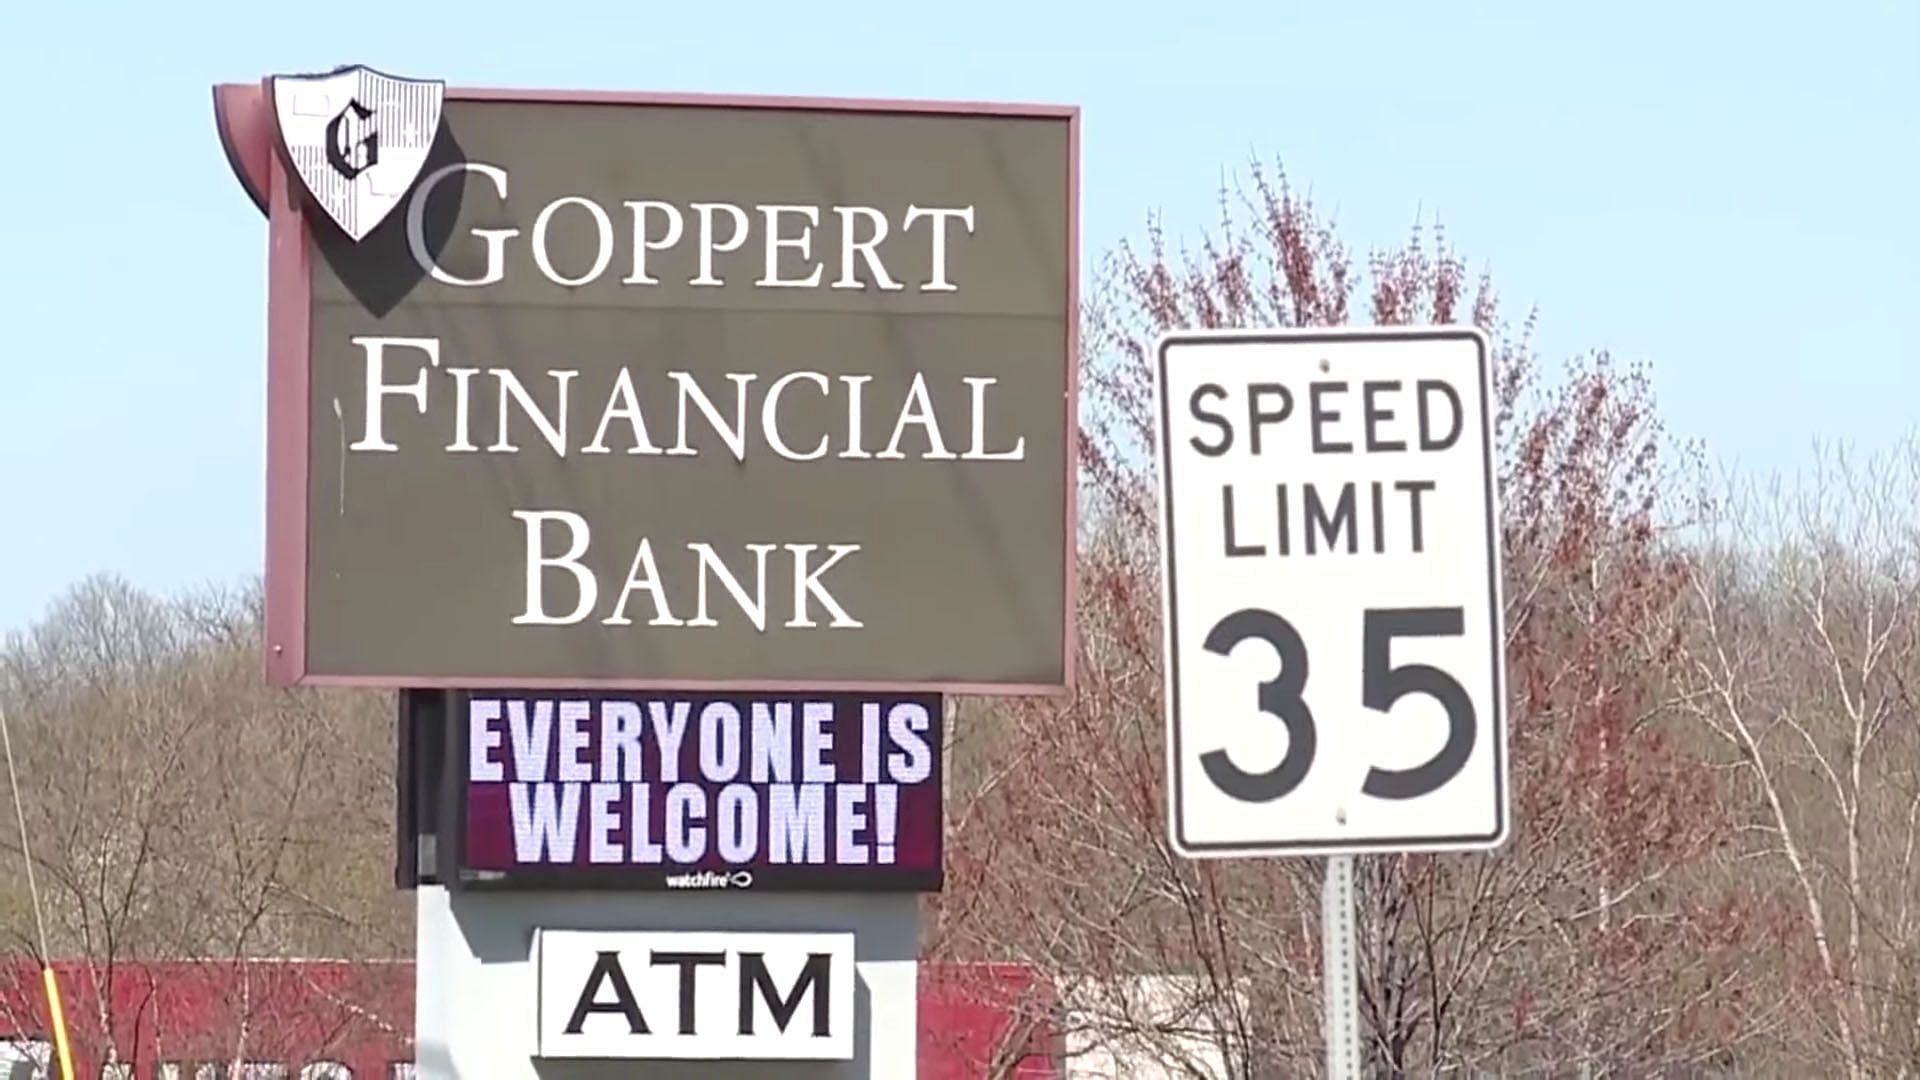 Goppert Financial Bank. (Image via YouTube/@Fox4 News Kansas City)